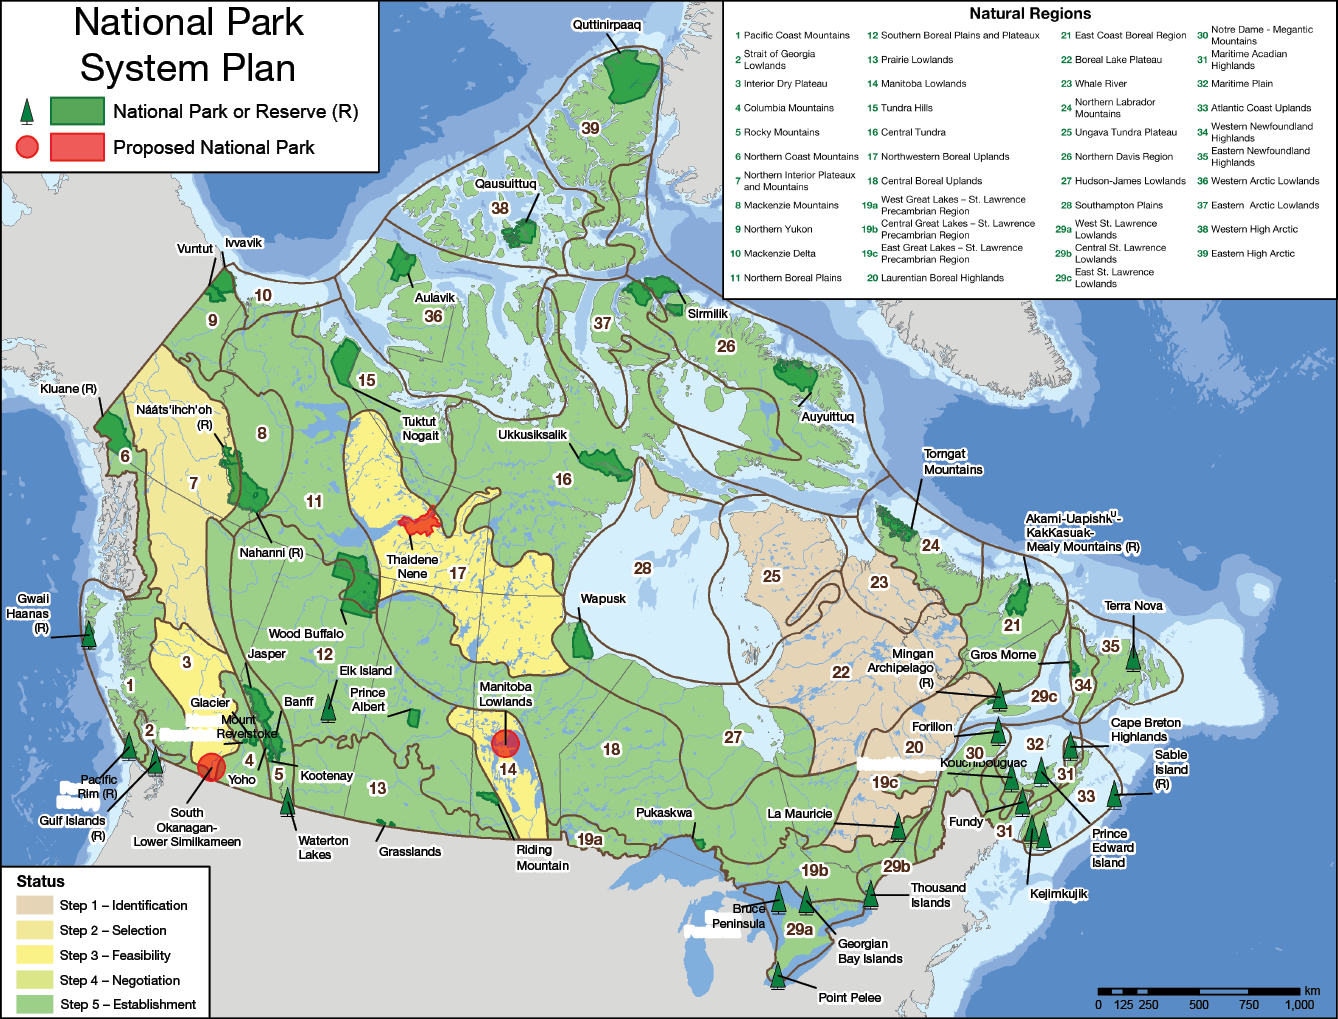 Figure 1: National Park System Plan